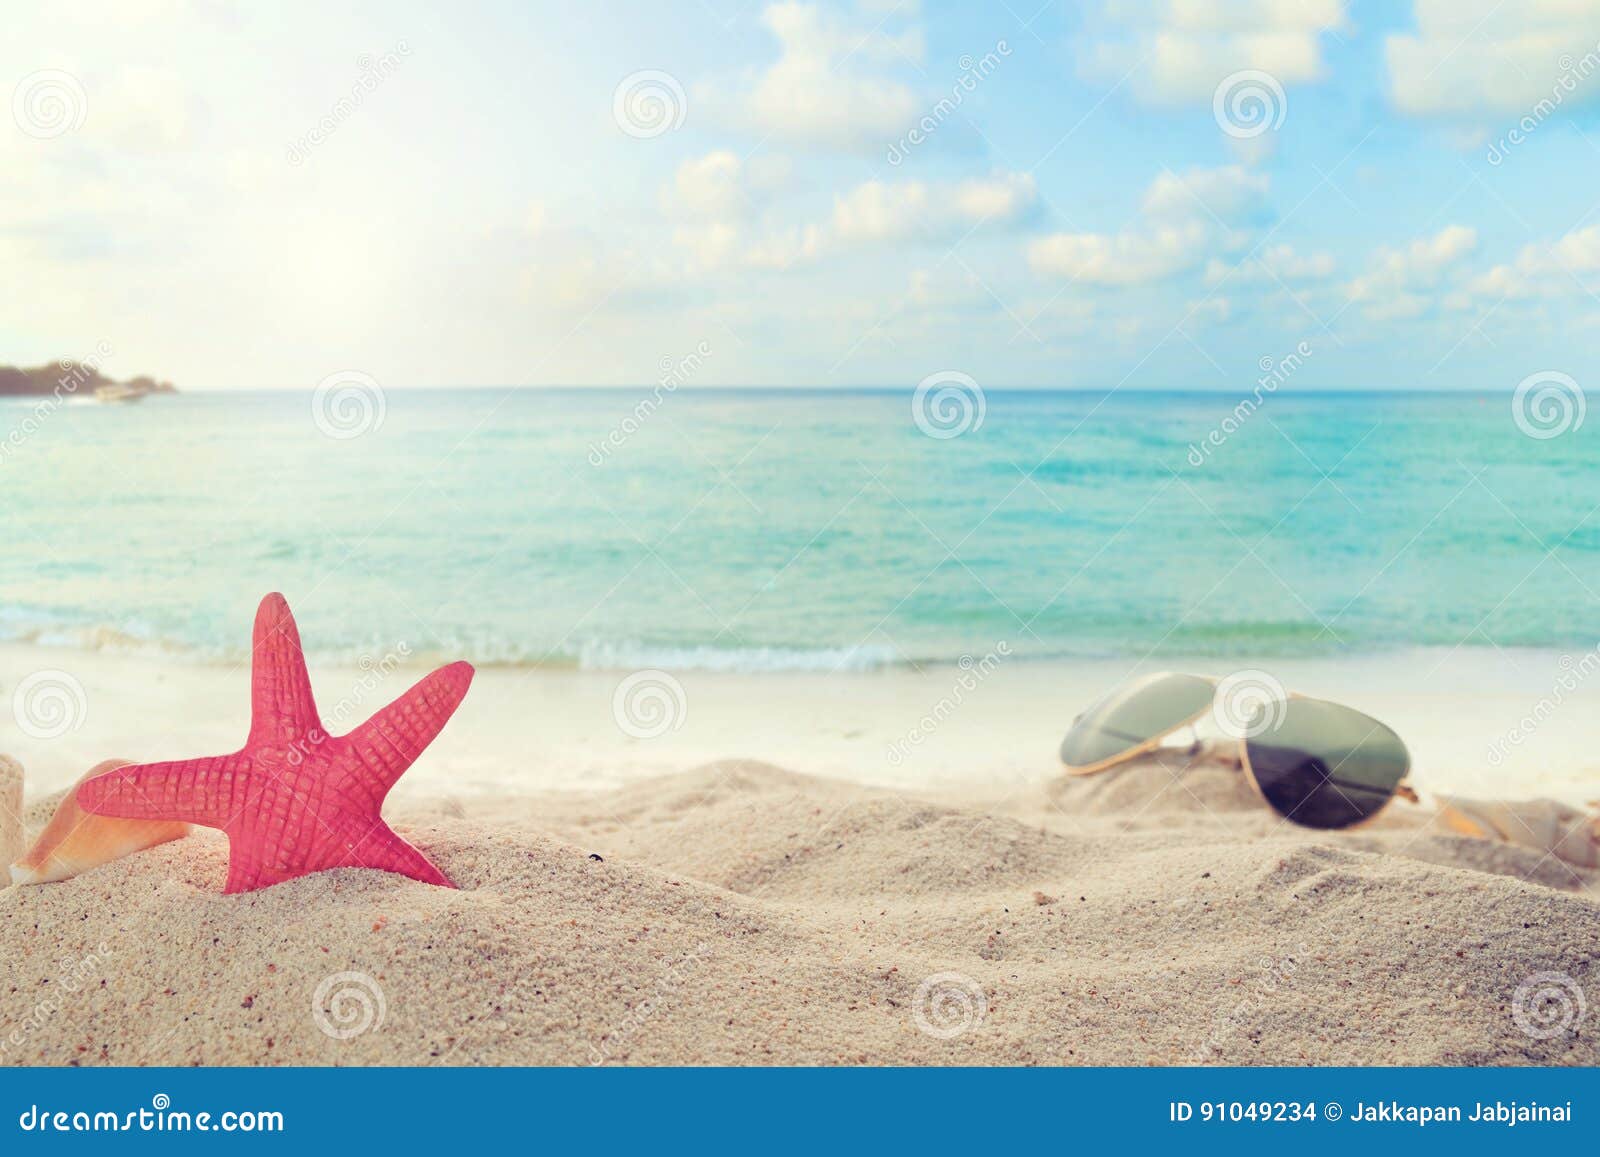 sunglasses on sandy in seaside summer beach with starfish, shells, coral on sandbar and blur sea background